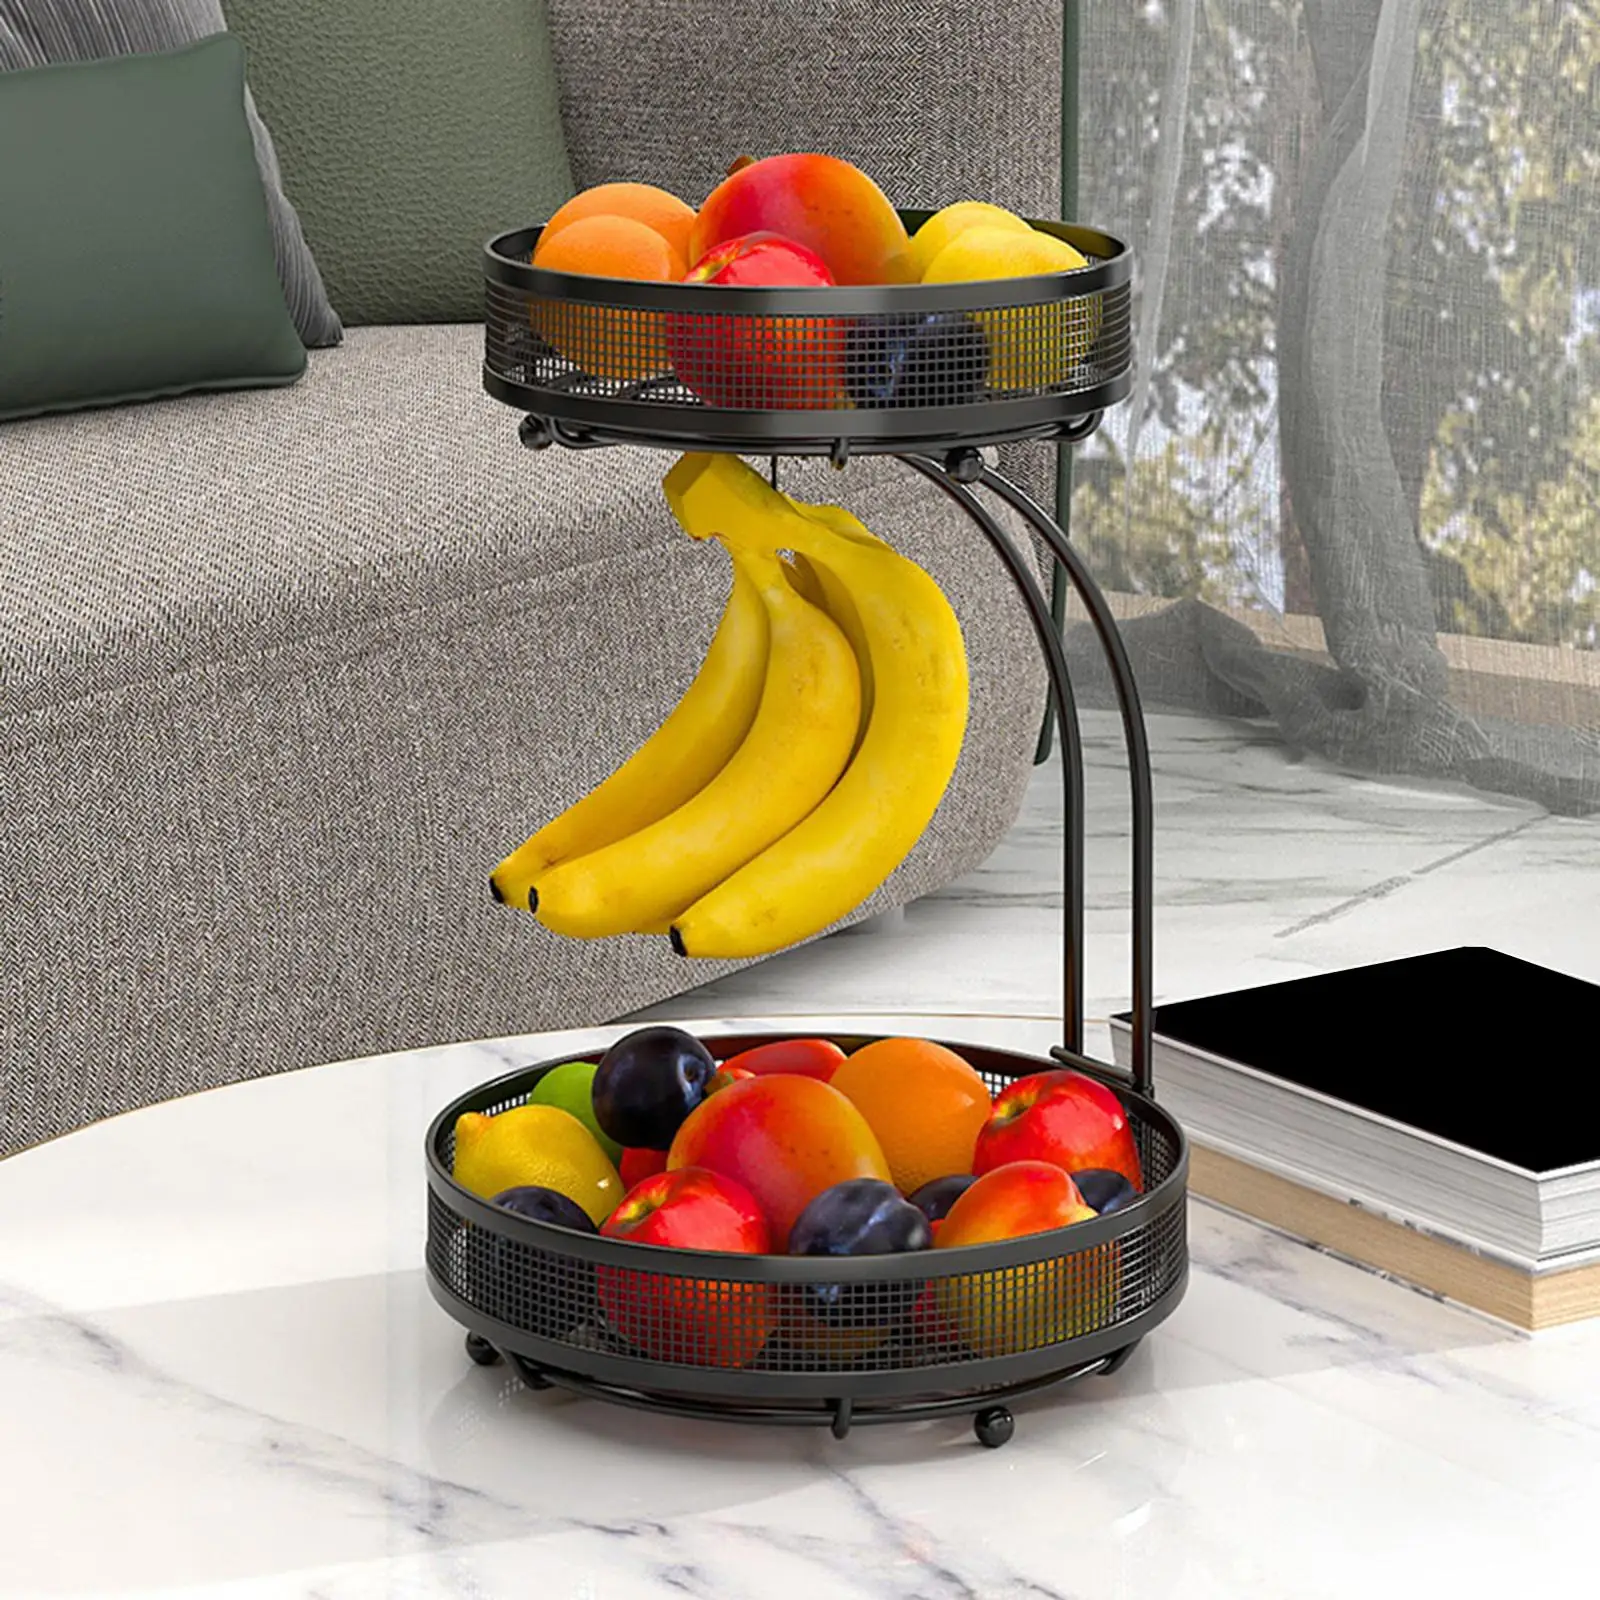 Metal Wire 2 Tier Fruit Basket for Kitchen Countertop Detachable Fruit Holder Fruit Bowl for Bread Vegetables Snacks Dessert